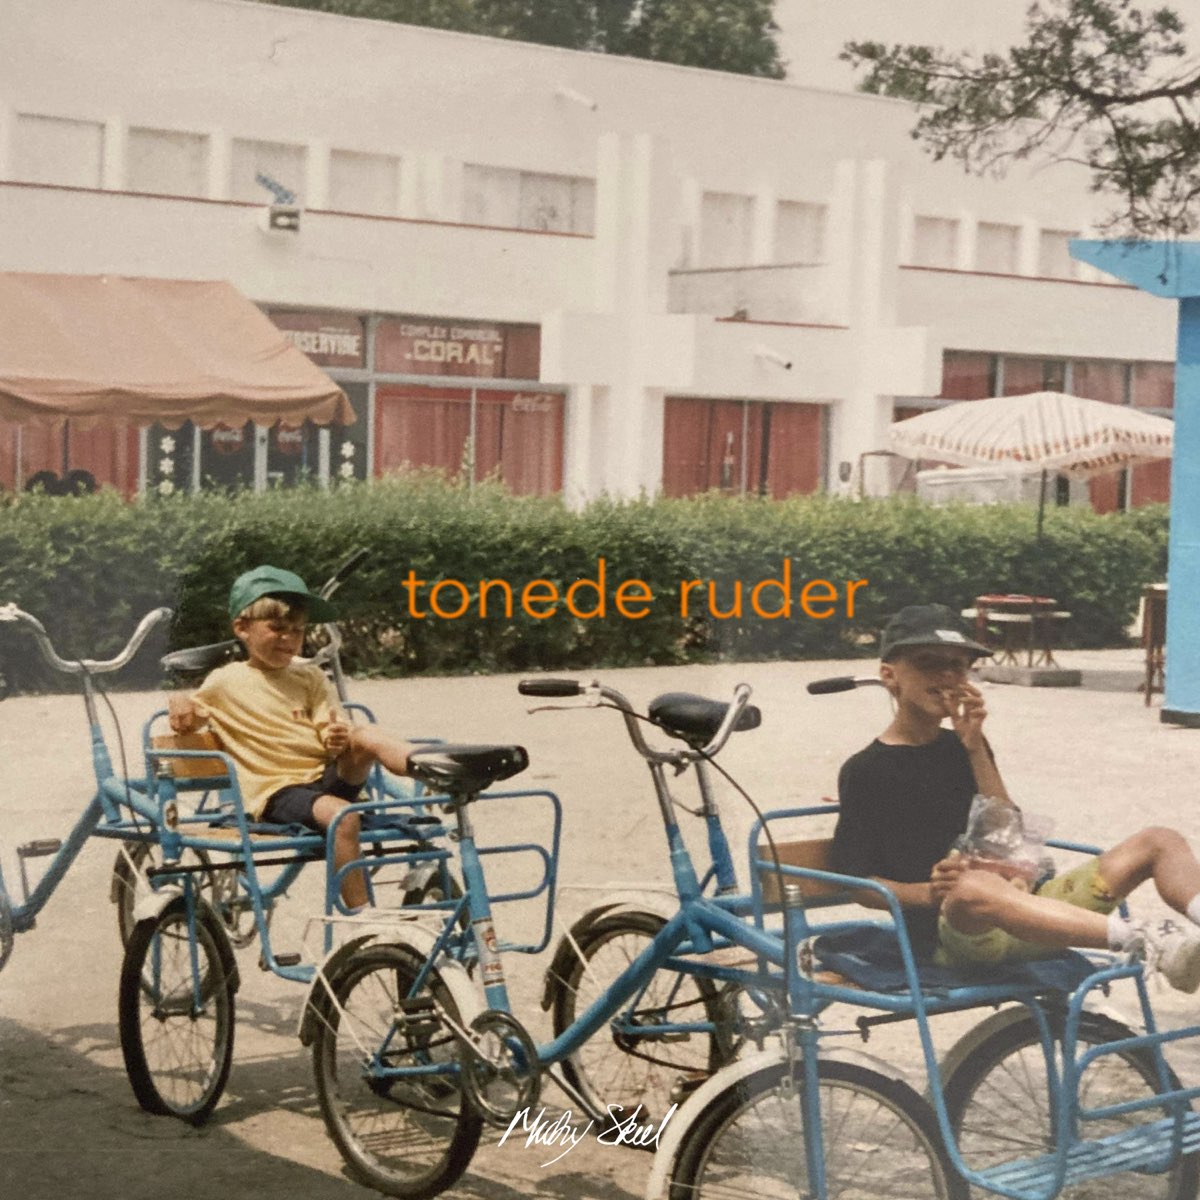 Tonede Ruder EP by Micky Skeel on Apple Music